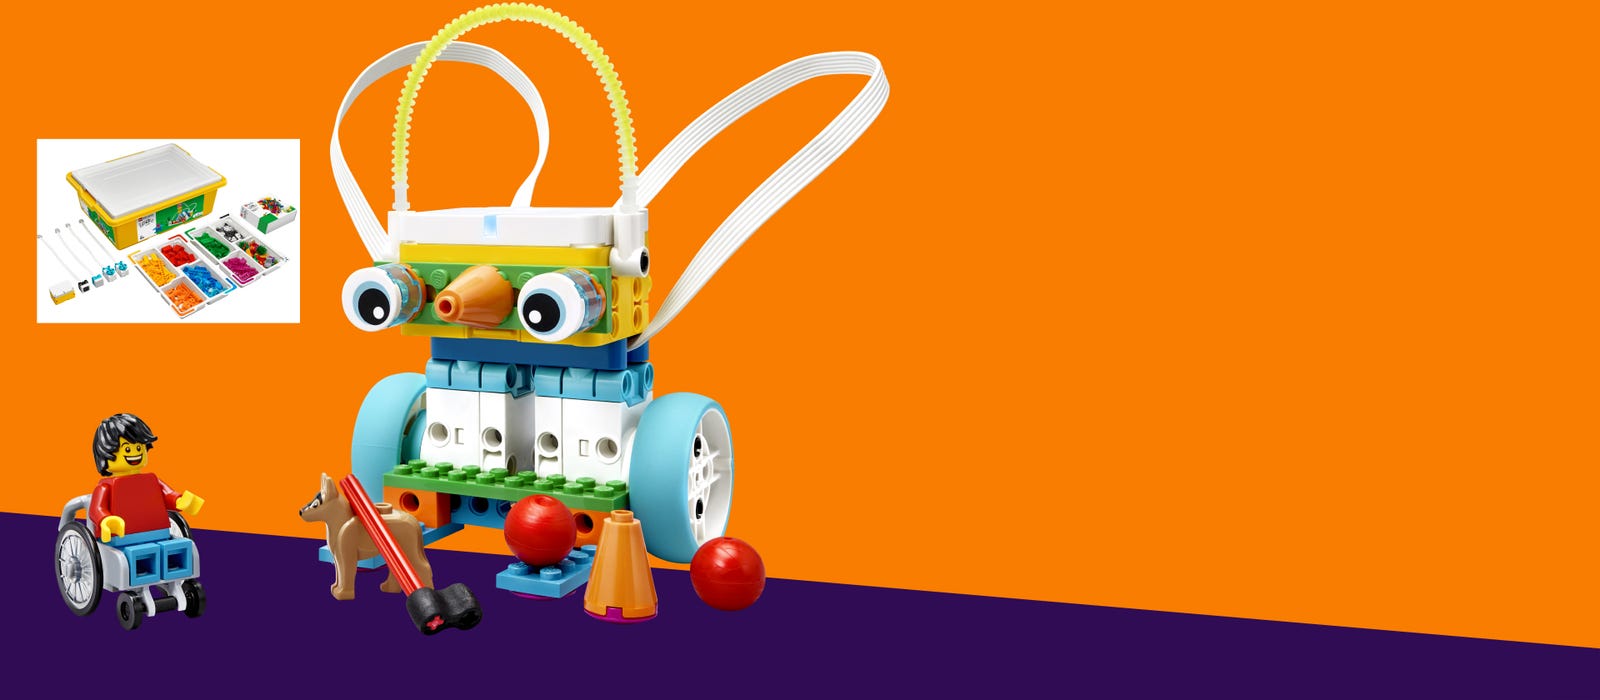 DIY Science Project Modèle Robot Toy Enfants Education Learning